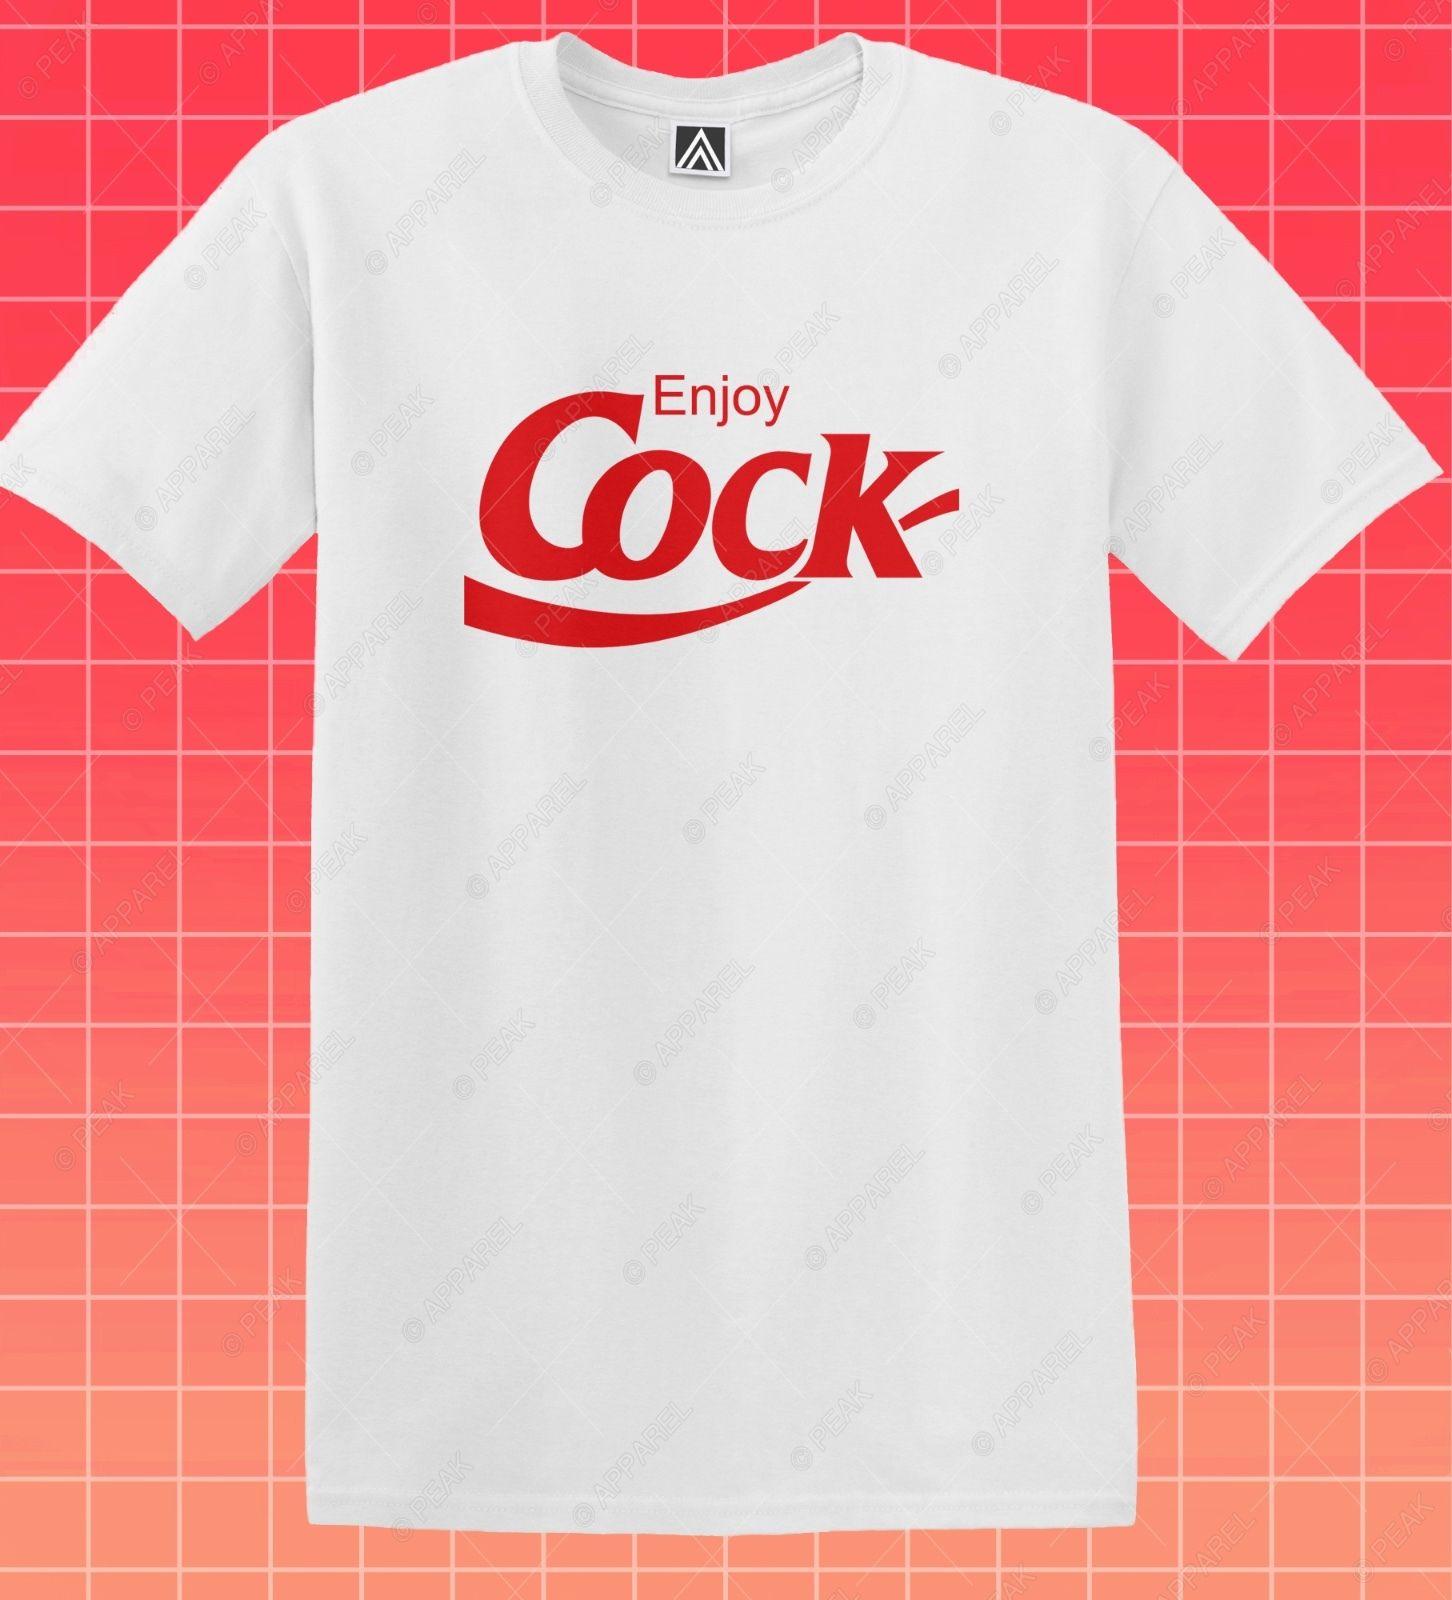 Design gay shirt t